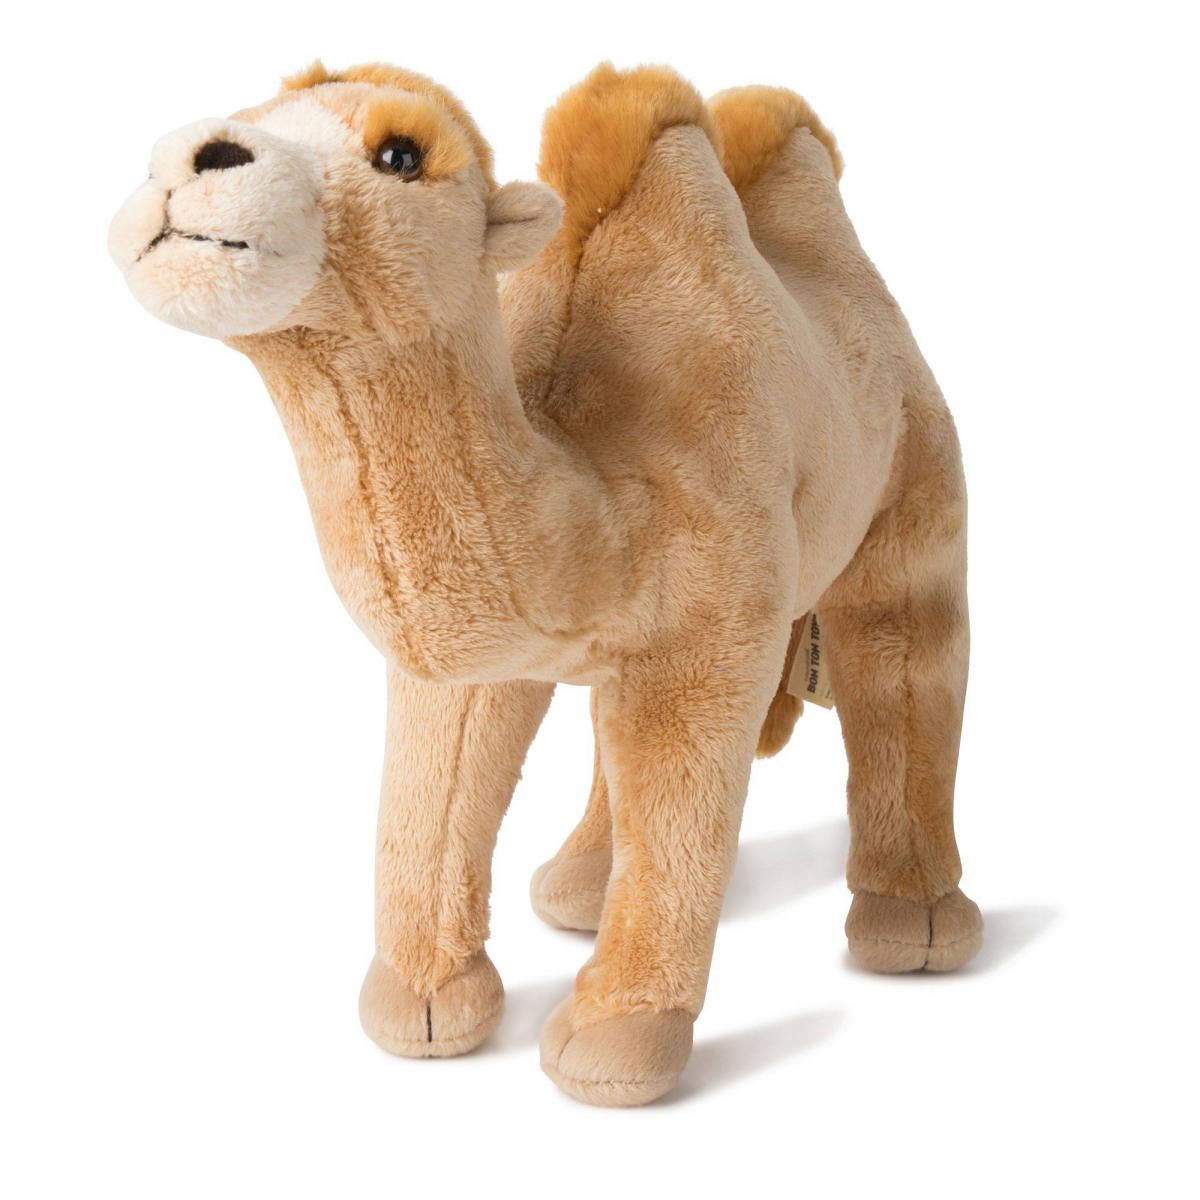 Kamel - WWF (Vrldsnaturfonden)